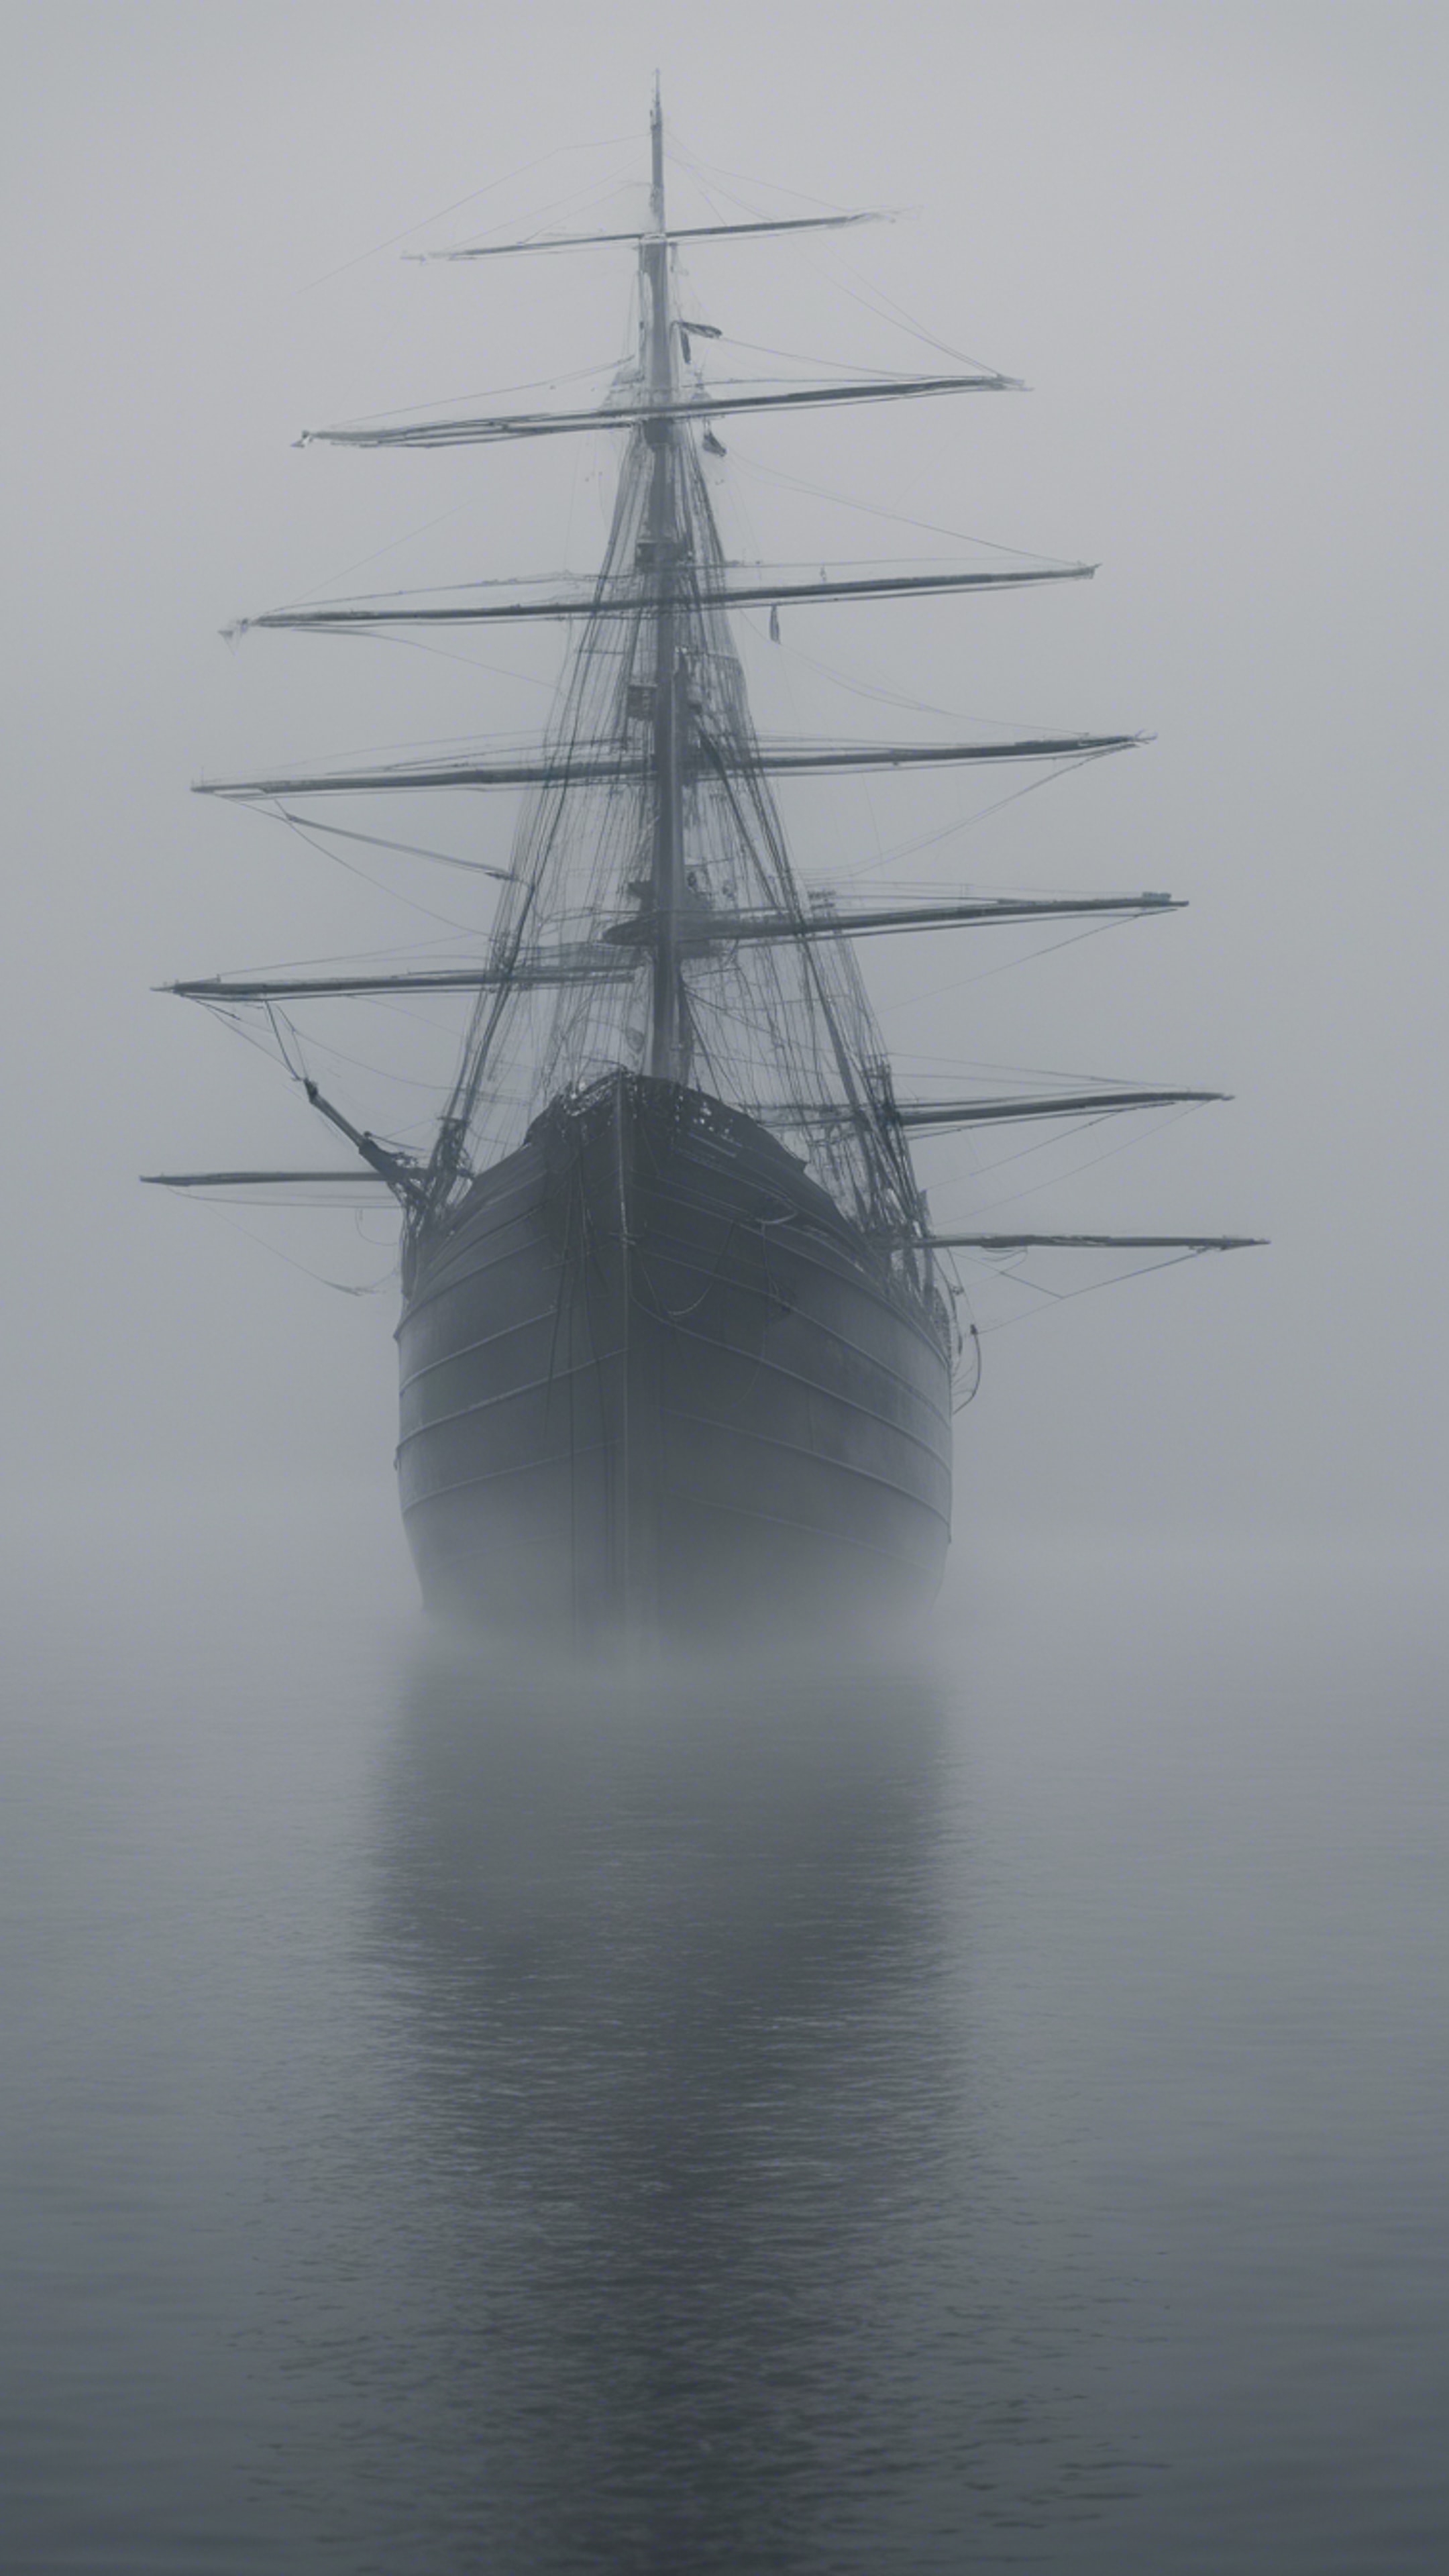 A ghost ship sailing through heavy fog, its masts obscured in drifting grey smoke. 牆紙[277c5cc3bc0e4445b824]